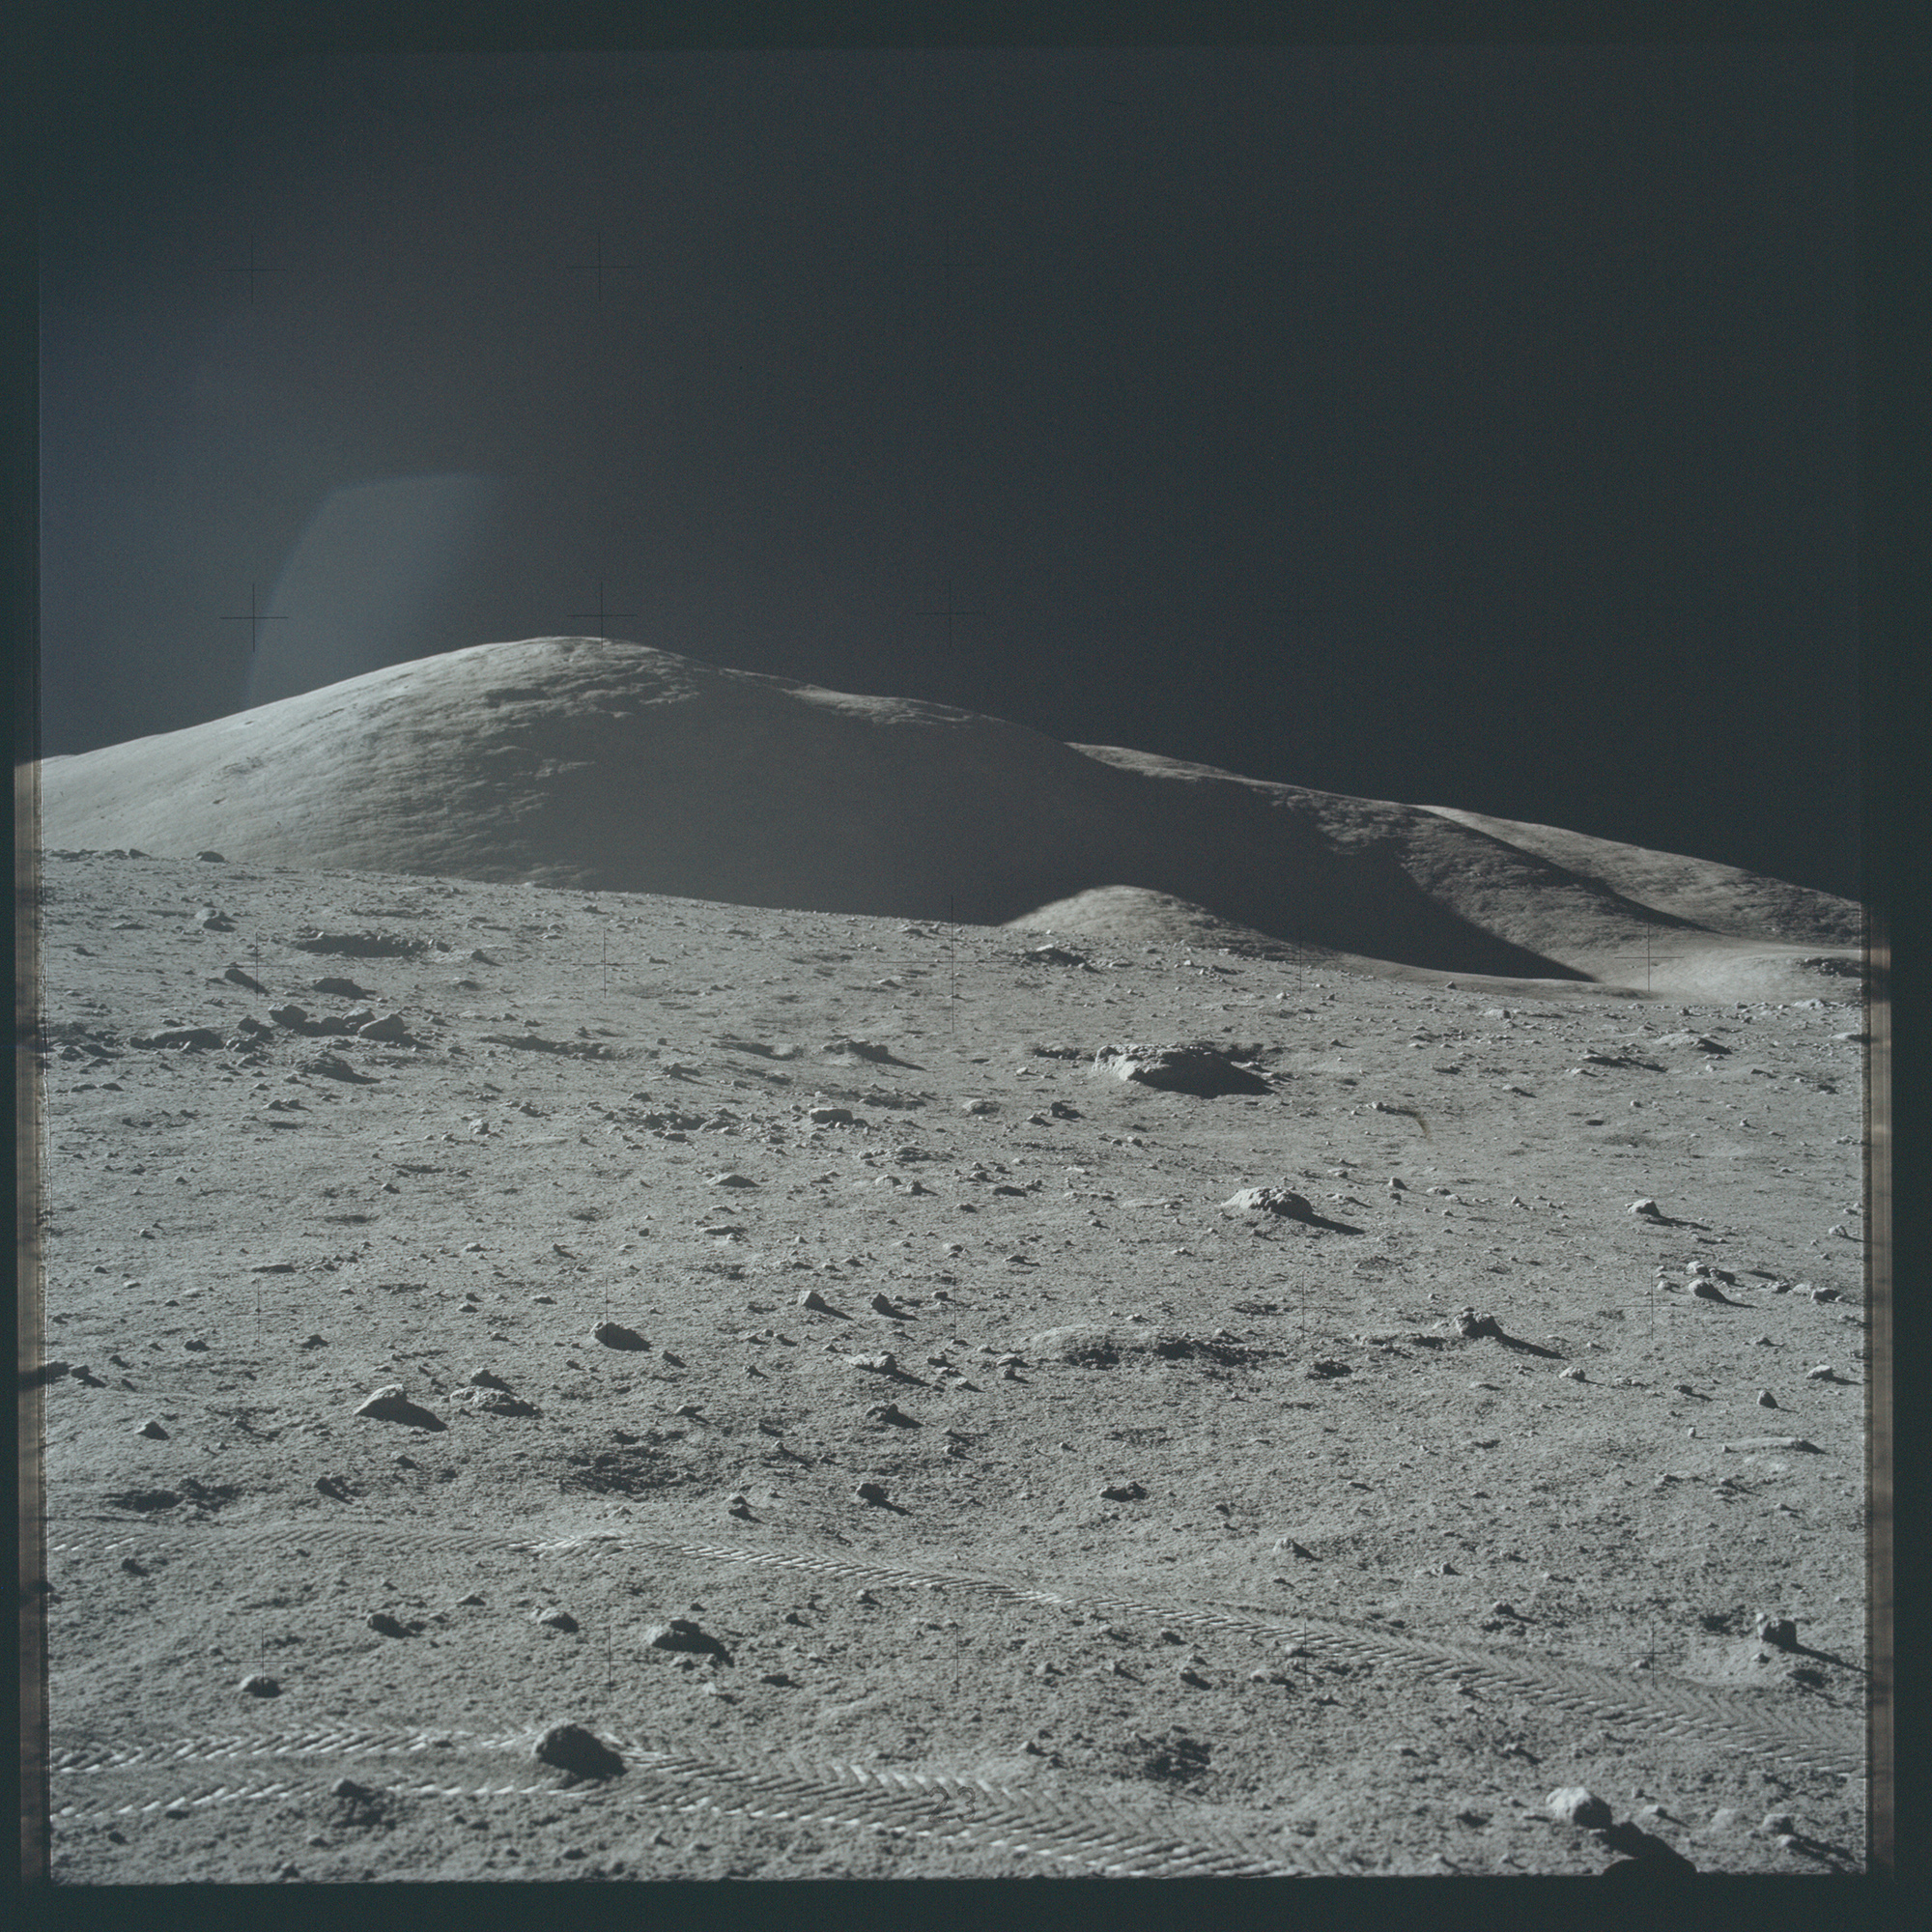 apollo-17-mission-moon-landing-148.jpg